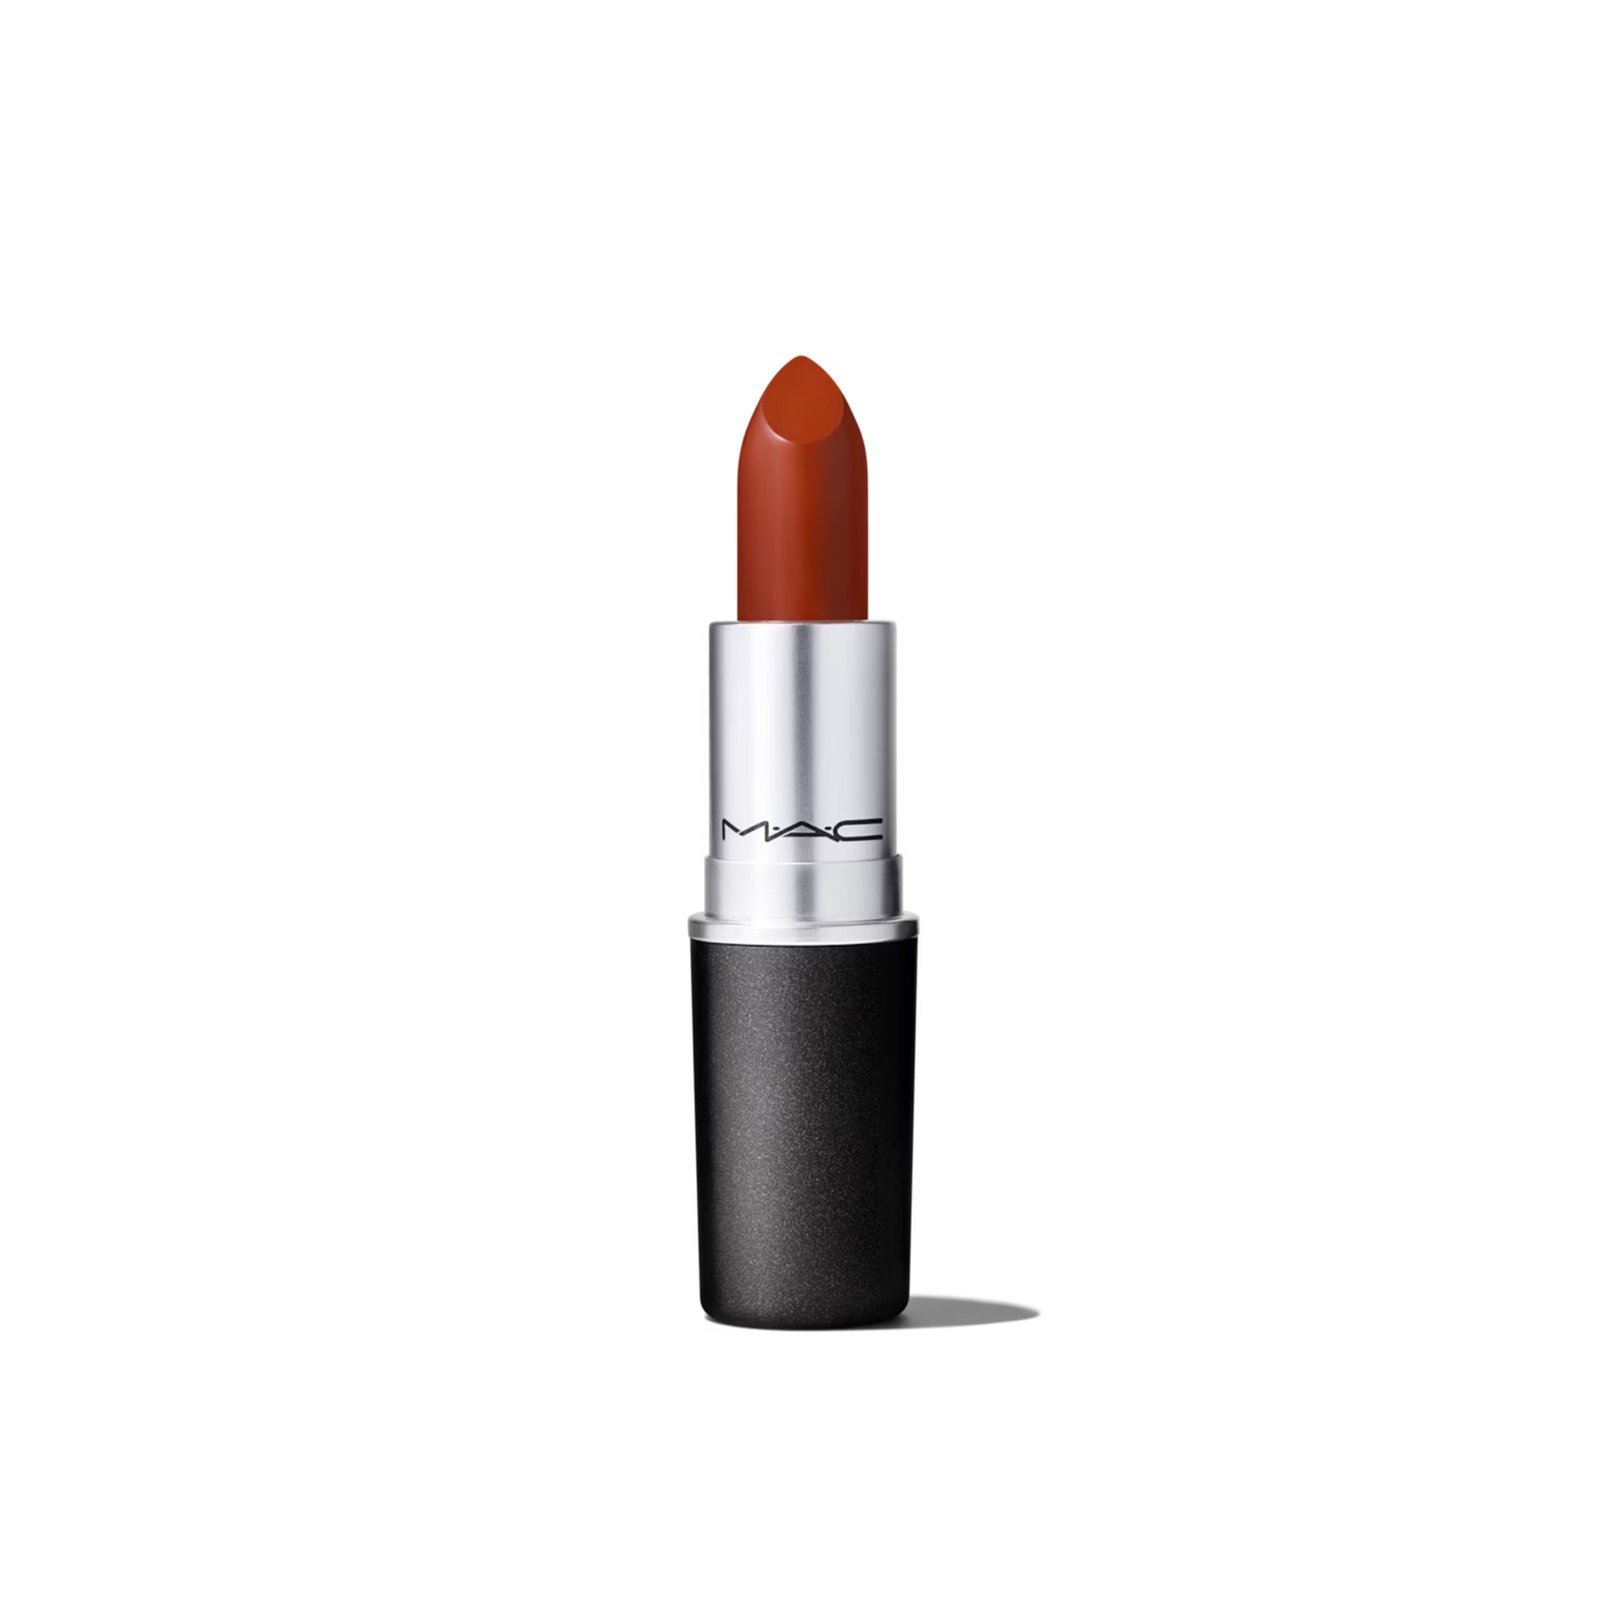 M.A.C Cosmetics Matte Lipstick 646 Marrakesh 3g (0.10 oz)